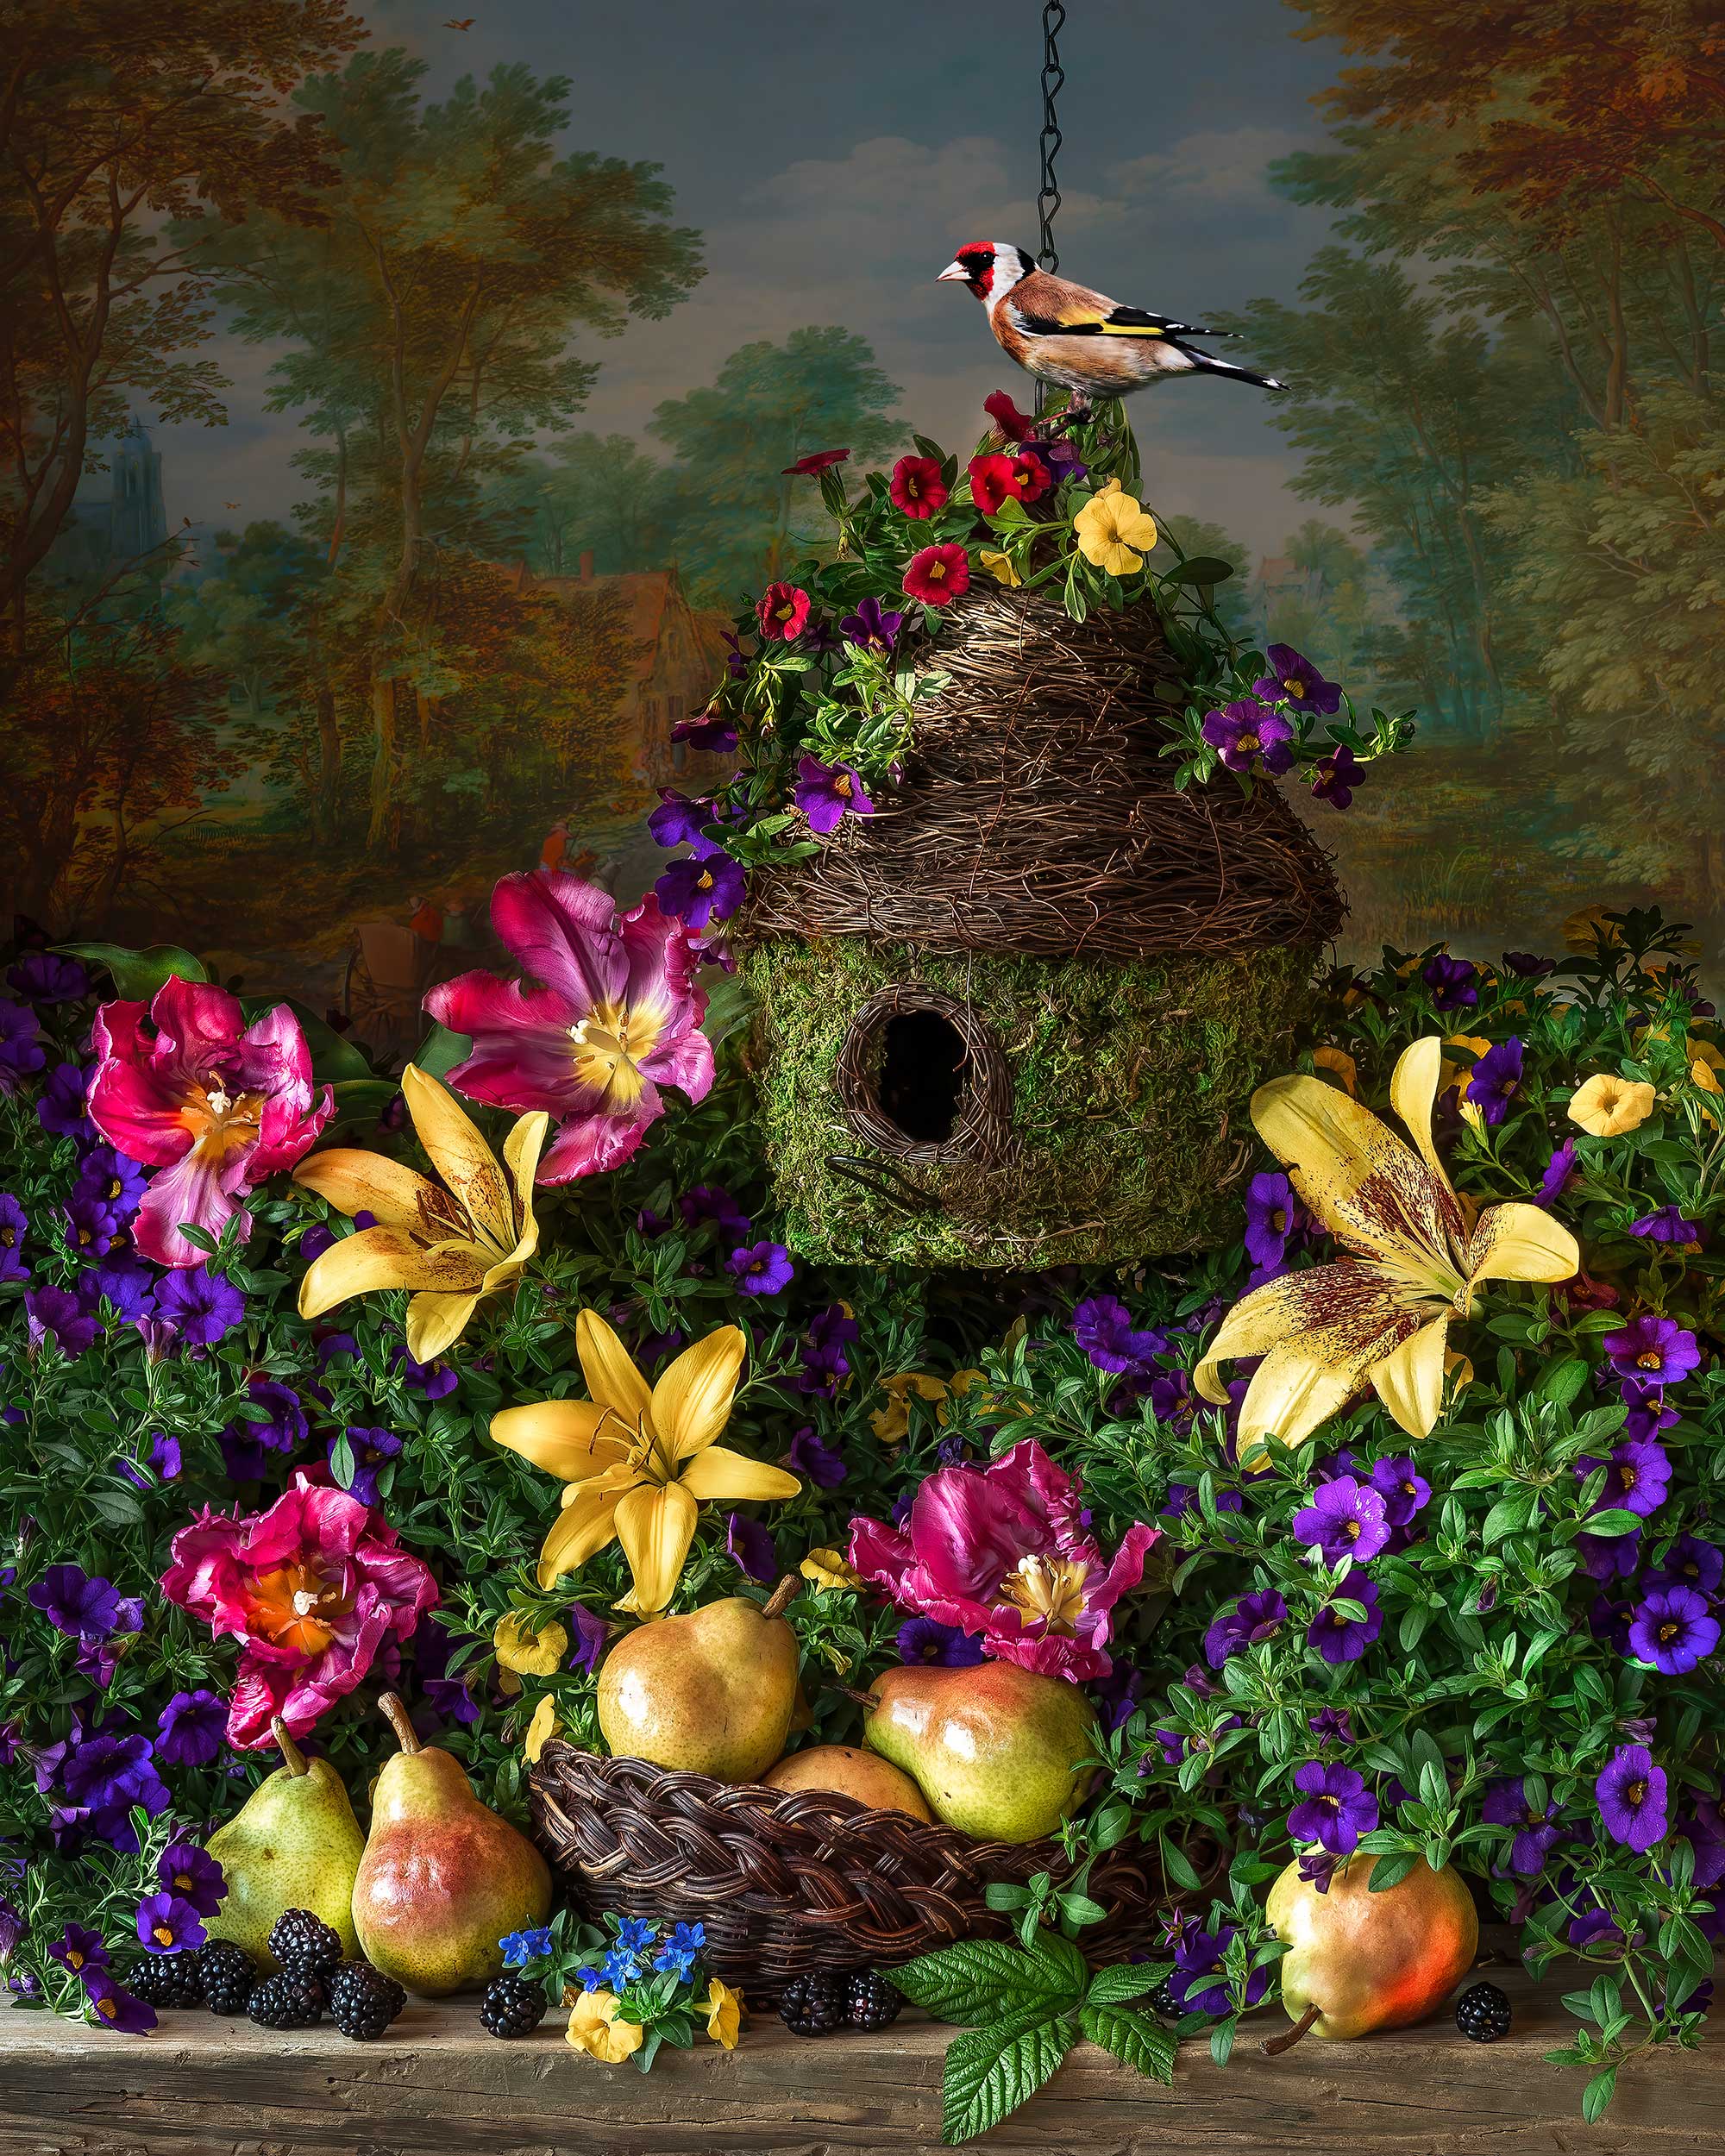 gold finch, lilies, birds, botanical art, still life photography, bird feeder, spring flowers, pears, Слуцкая Яна